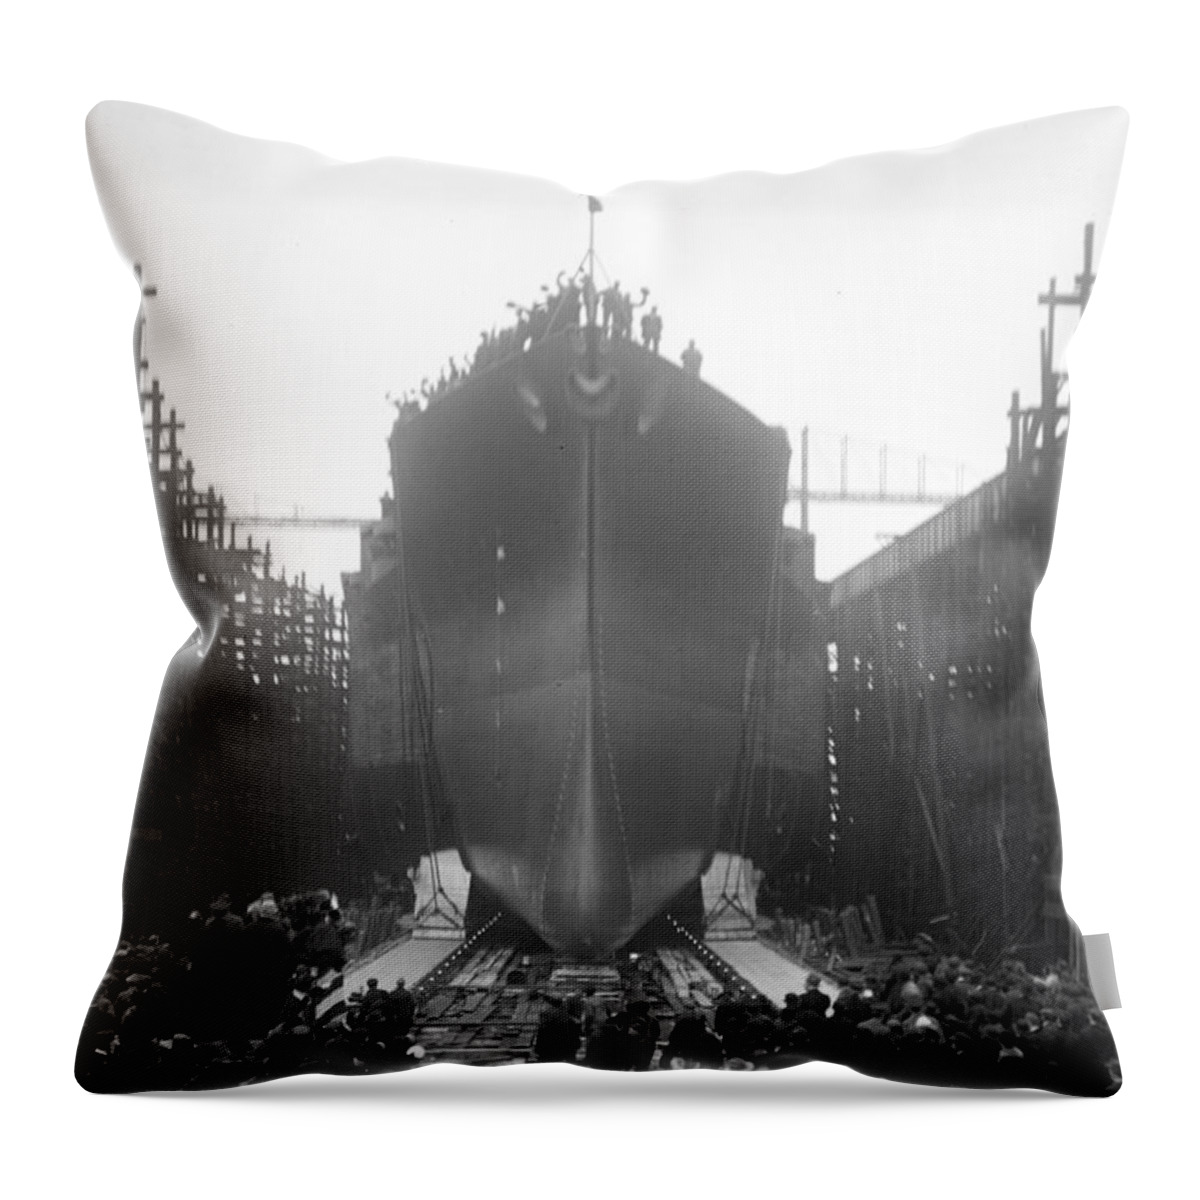 1917 Throw Pillow featuring the photograph Battleship Launch, 1917 by Granger